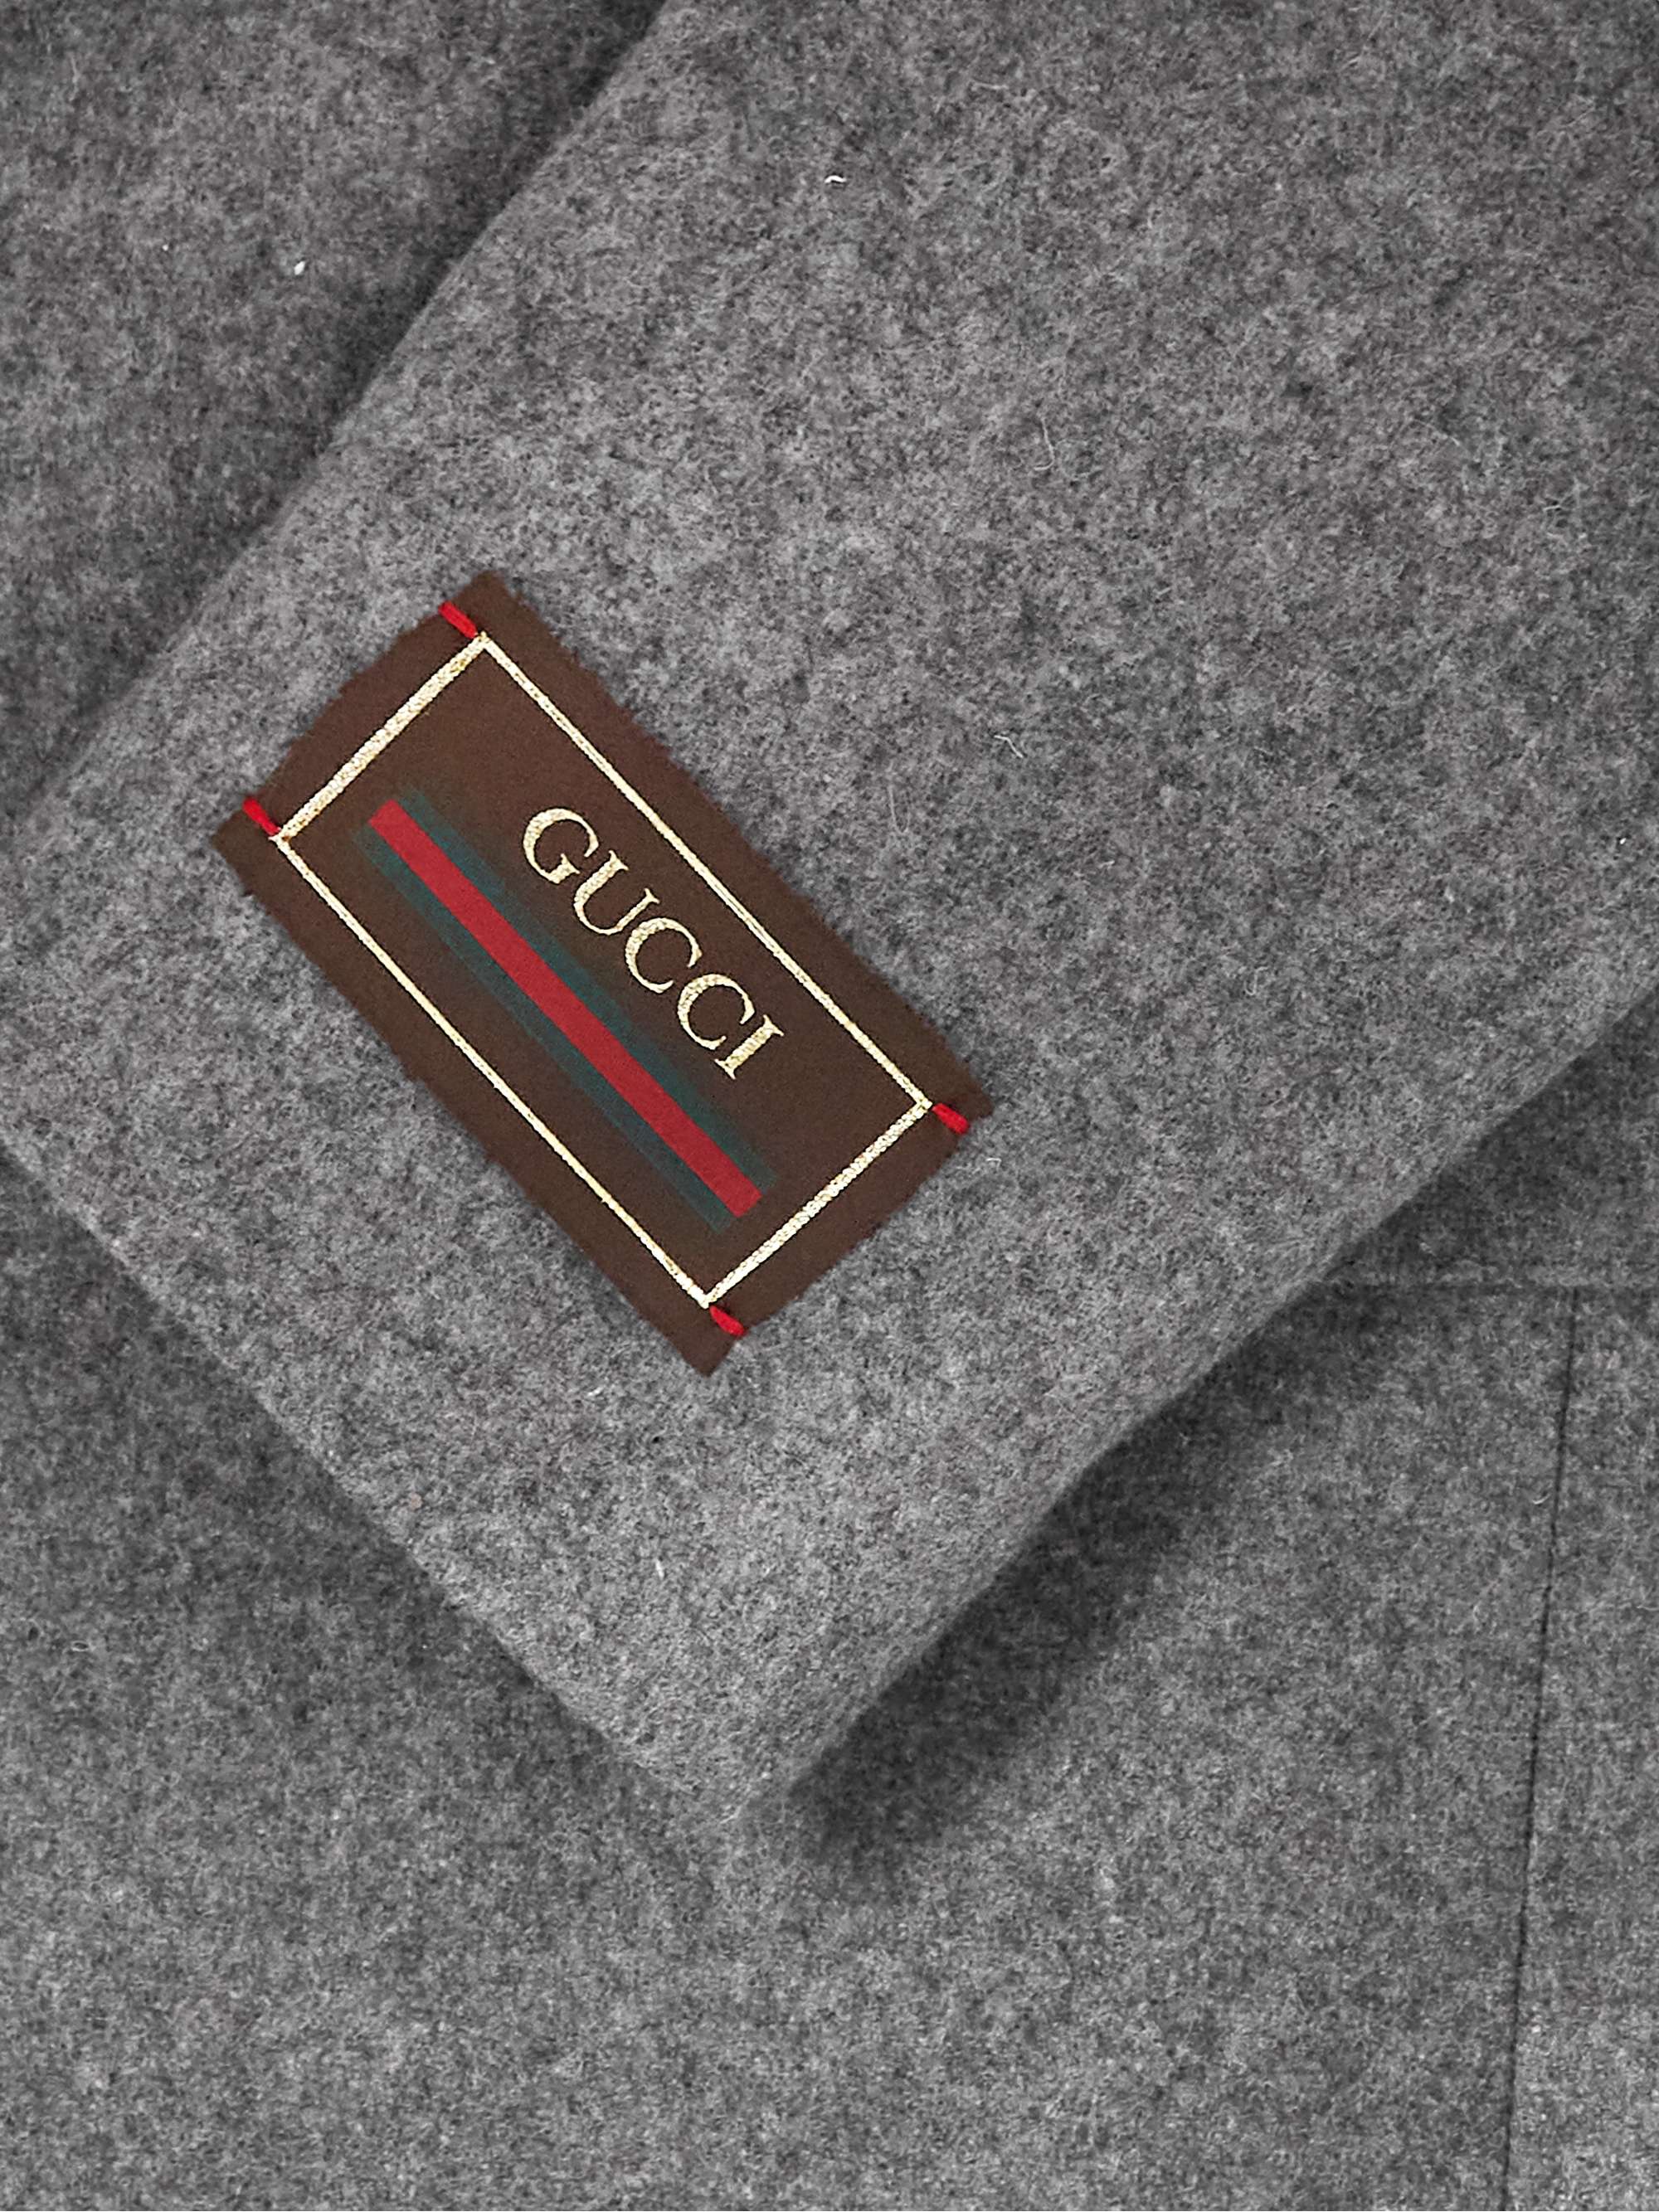 GUCCI Wool and Cashmere-Blend Felt Suit Jacket